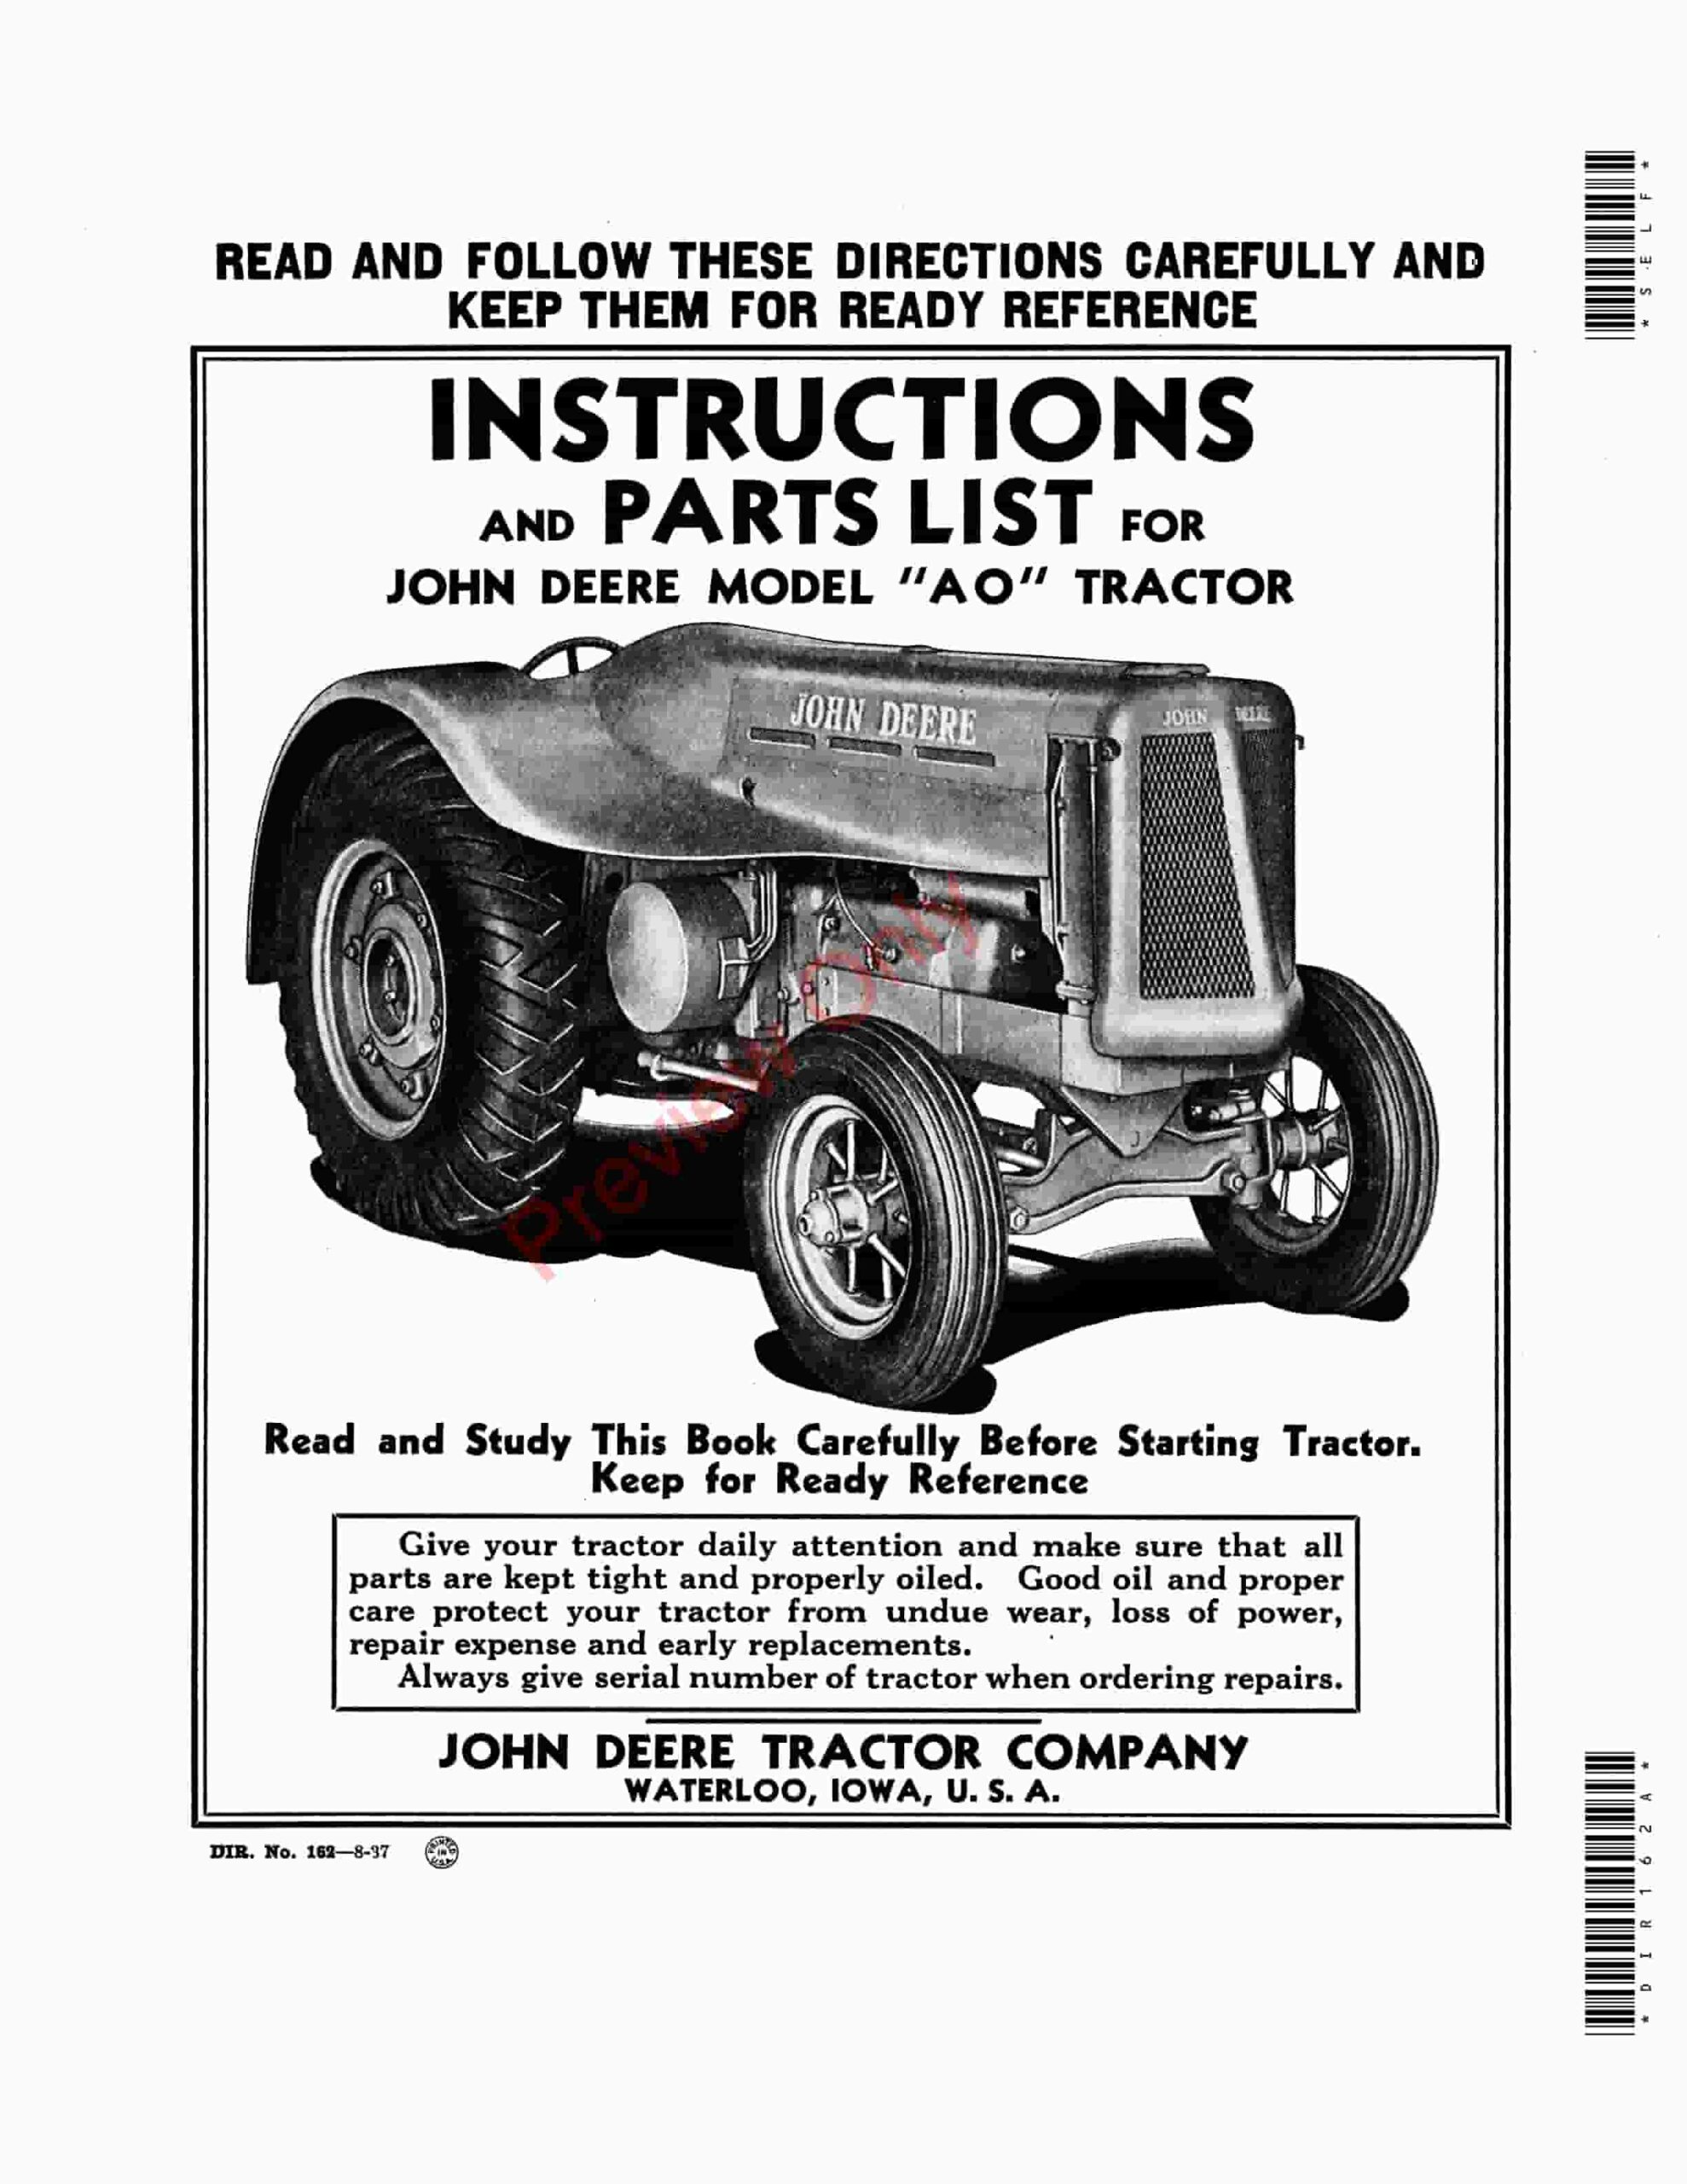 John Deere Model AO Tractor Parts Catalog Operation Manual, Instructions and Parts List DIR162A 01AUG37-1